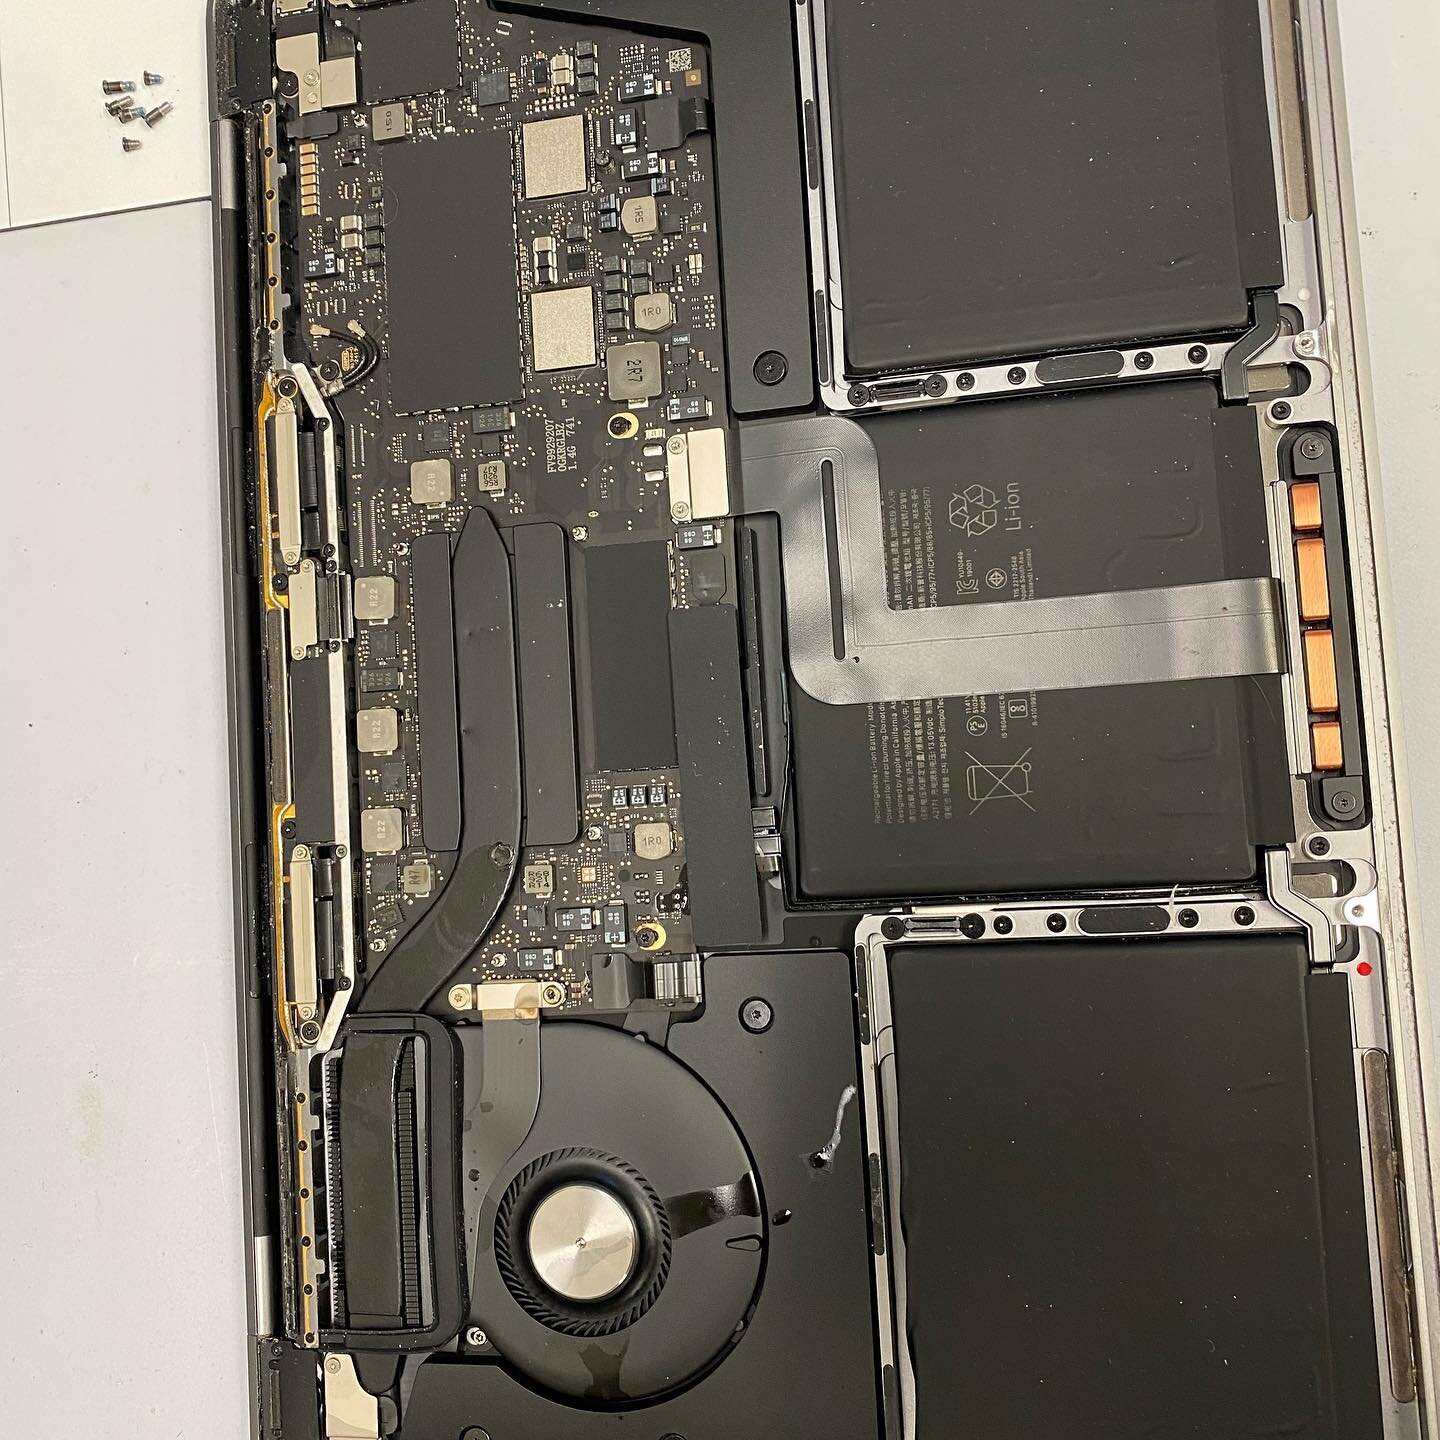 Liquid damaged MacBook Pro 2019 with Touch Bar, working great again. 
#macbookclinicframingham
#macbookpro
#liquiddamage